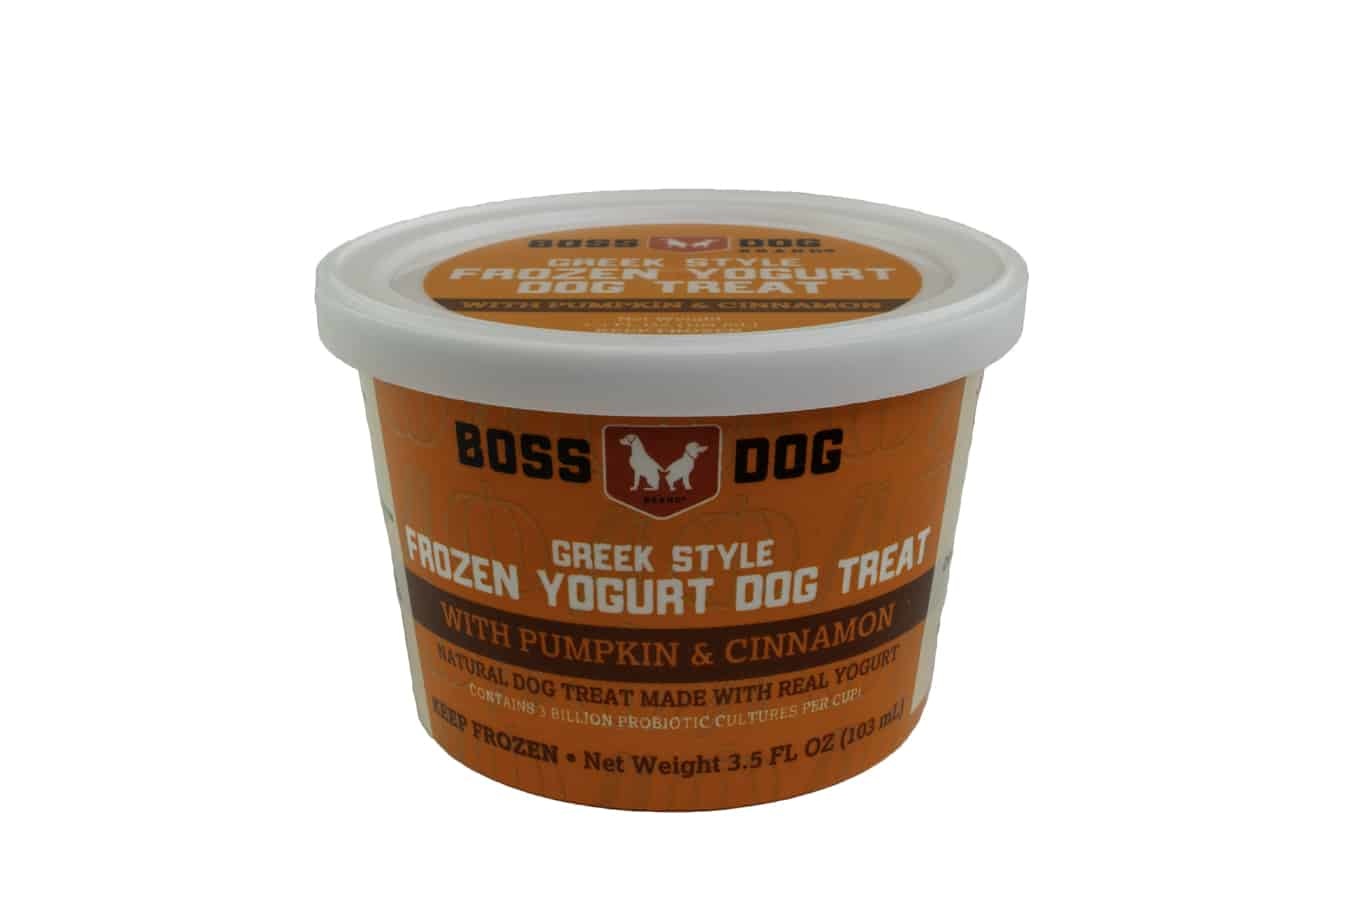 Boss Nation Brand Boss Dog Greek Style Frozen Yogurt with Pumpkin and Cinnamon 3.5oz - 4 Pack